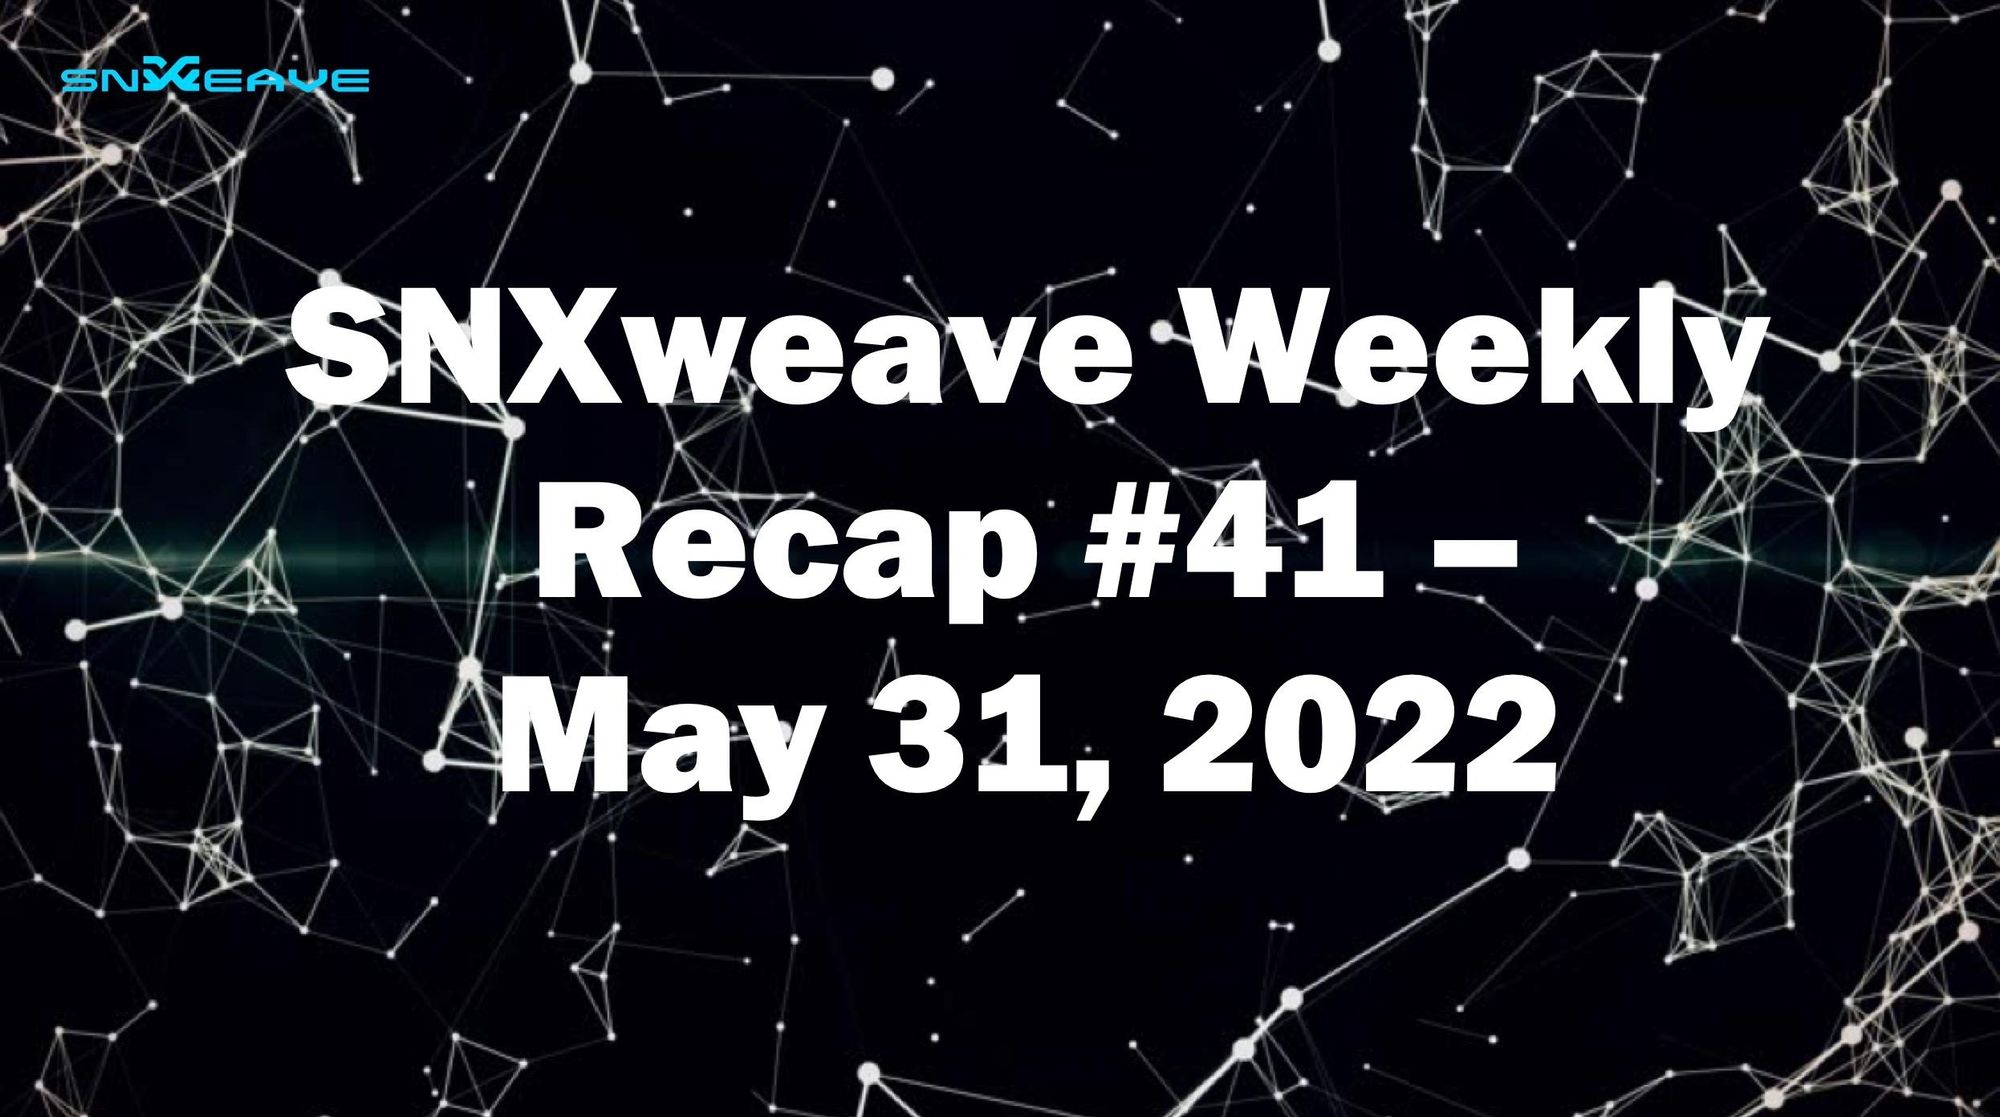 SNXweave Weekly Recap 41